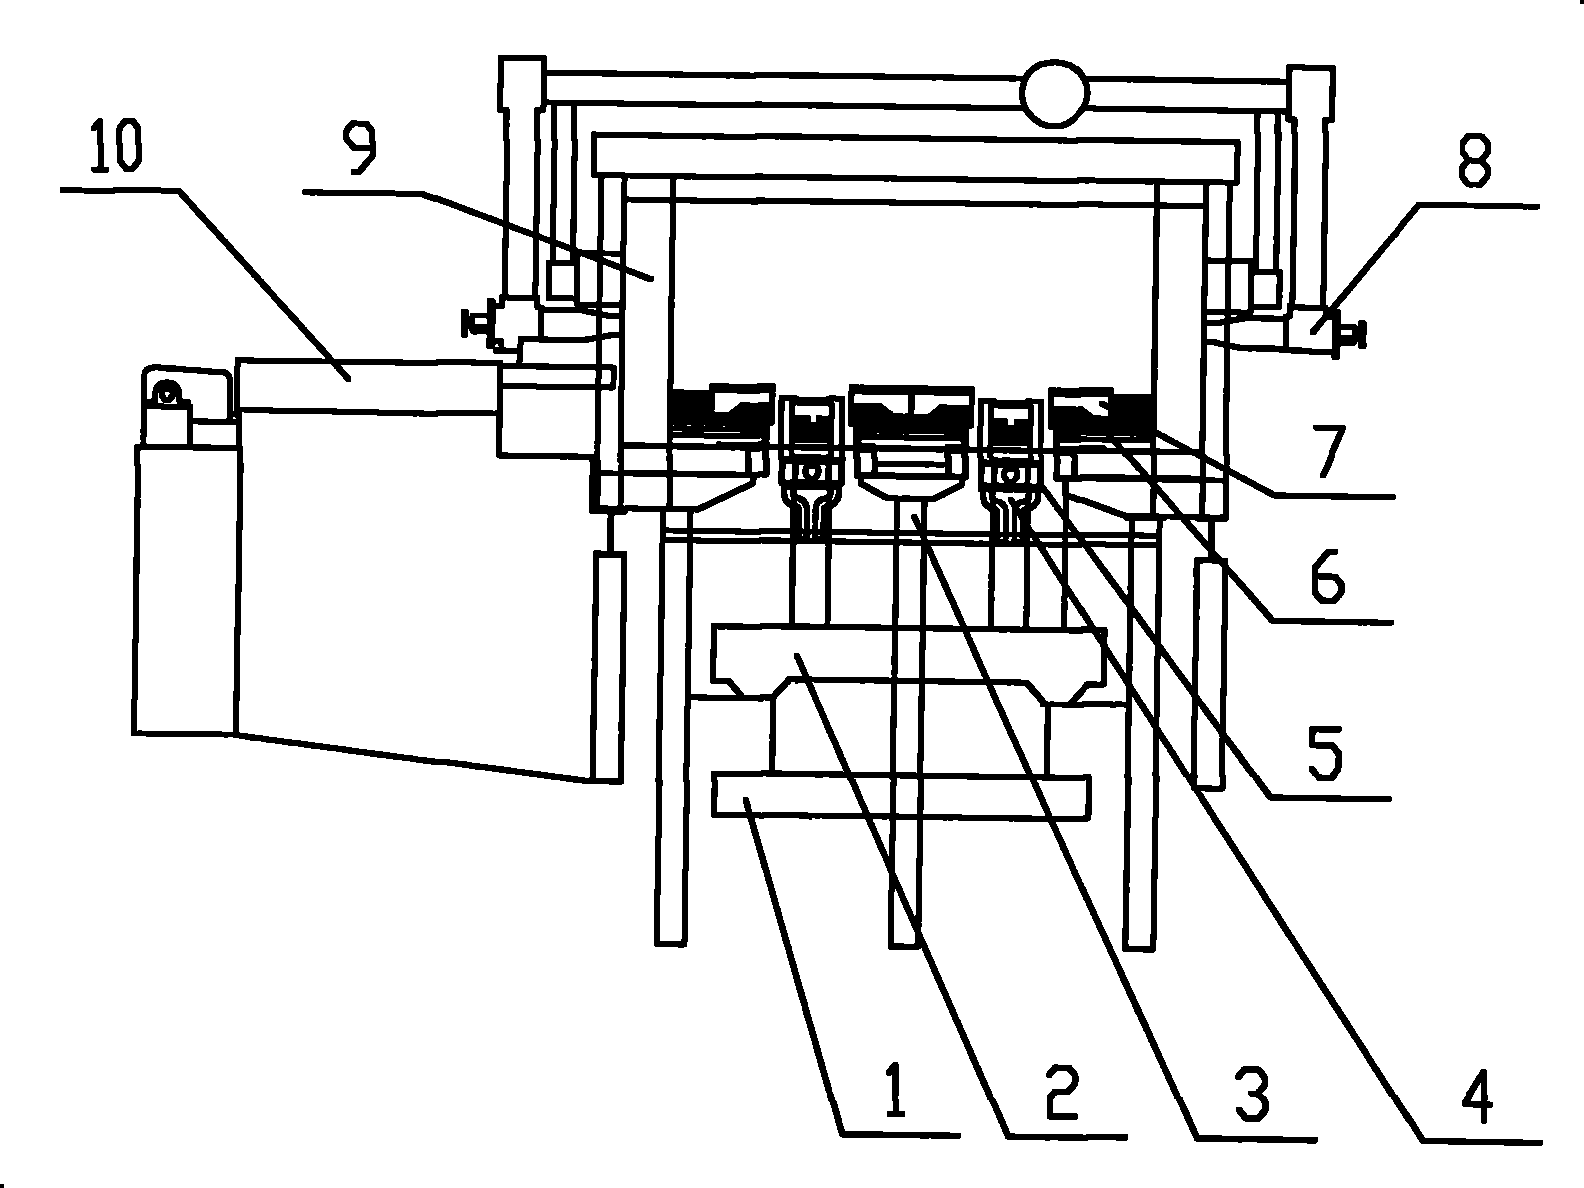 Stepping-bottom-type heating furnace